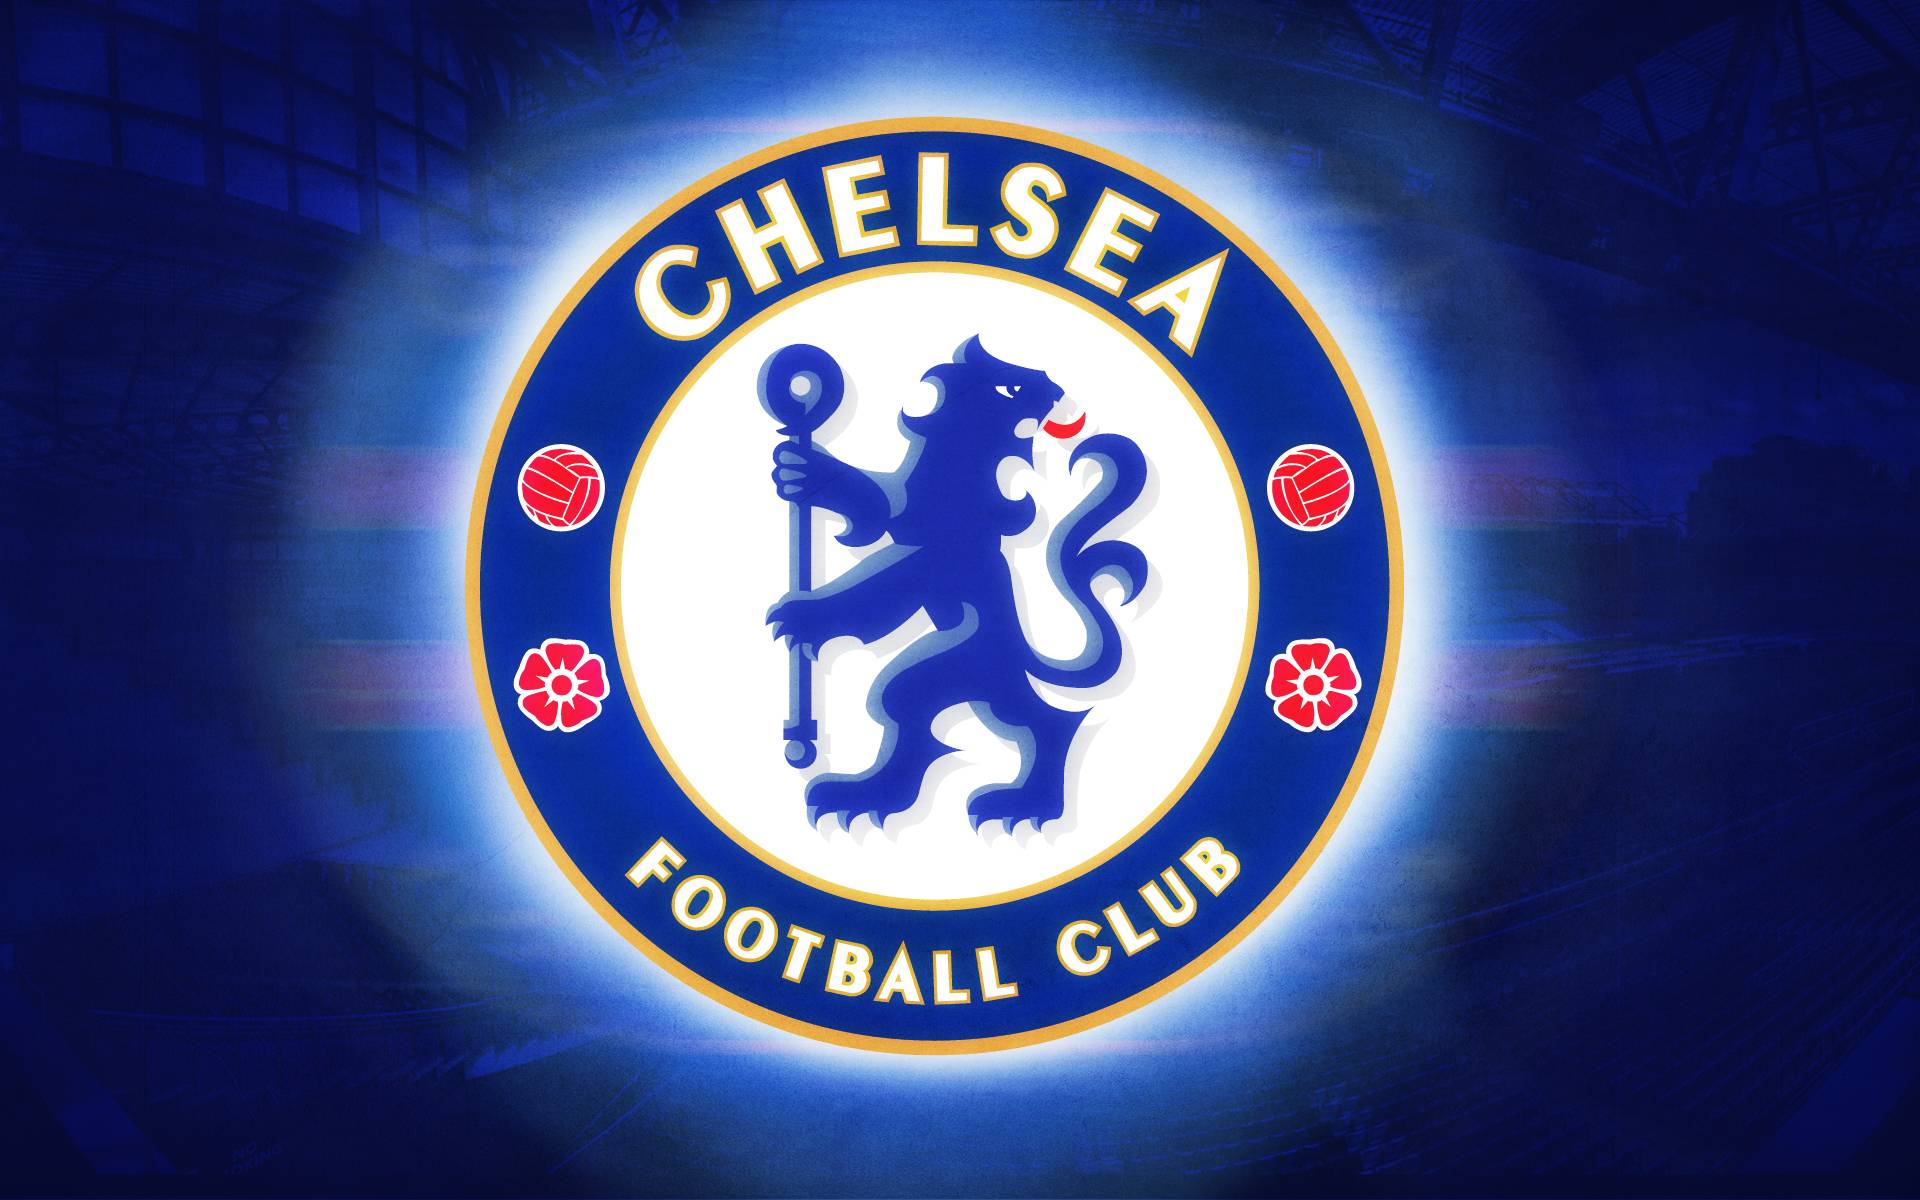 Chelsea Football Club Logo Wallpaper Download Wallpaper